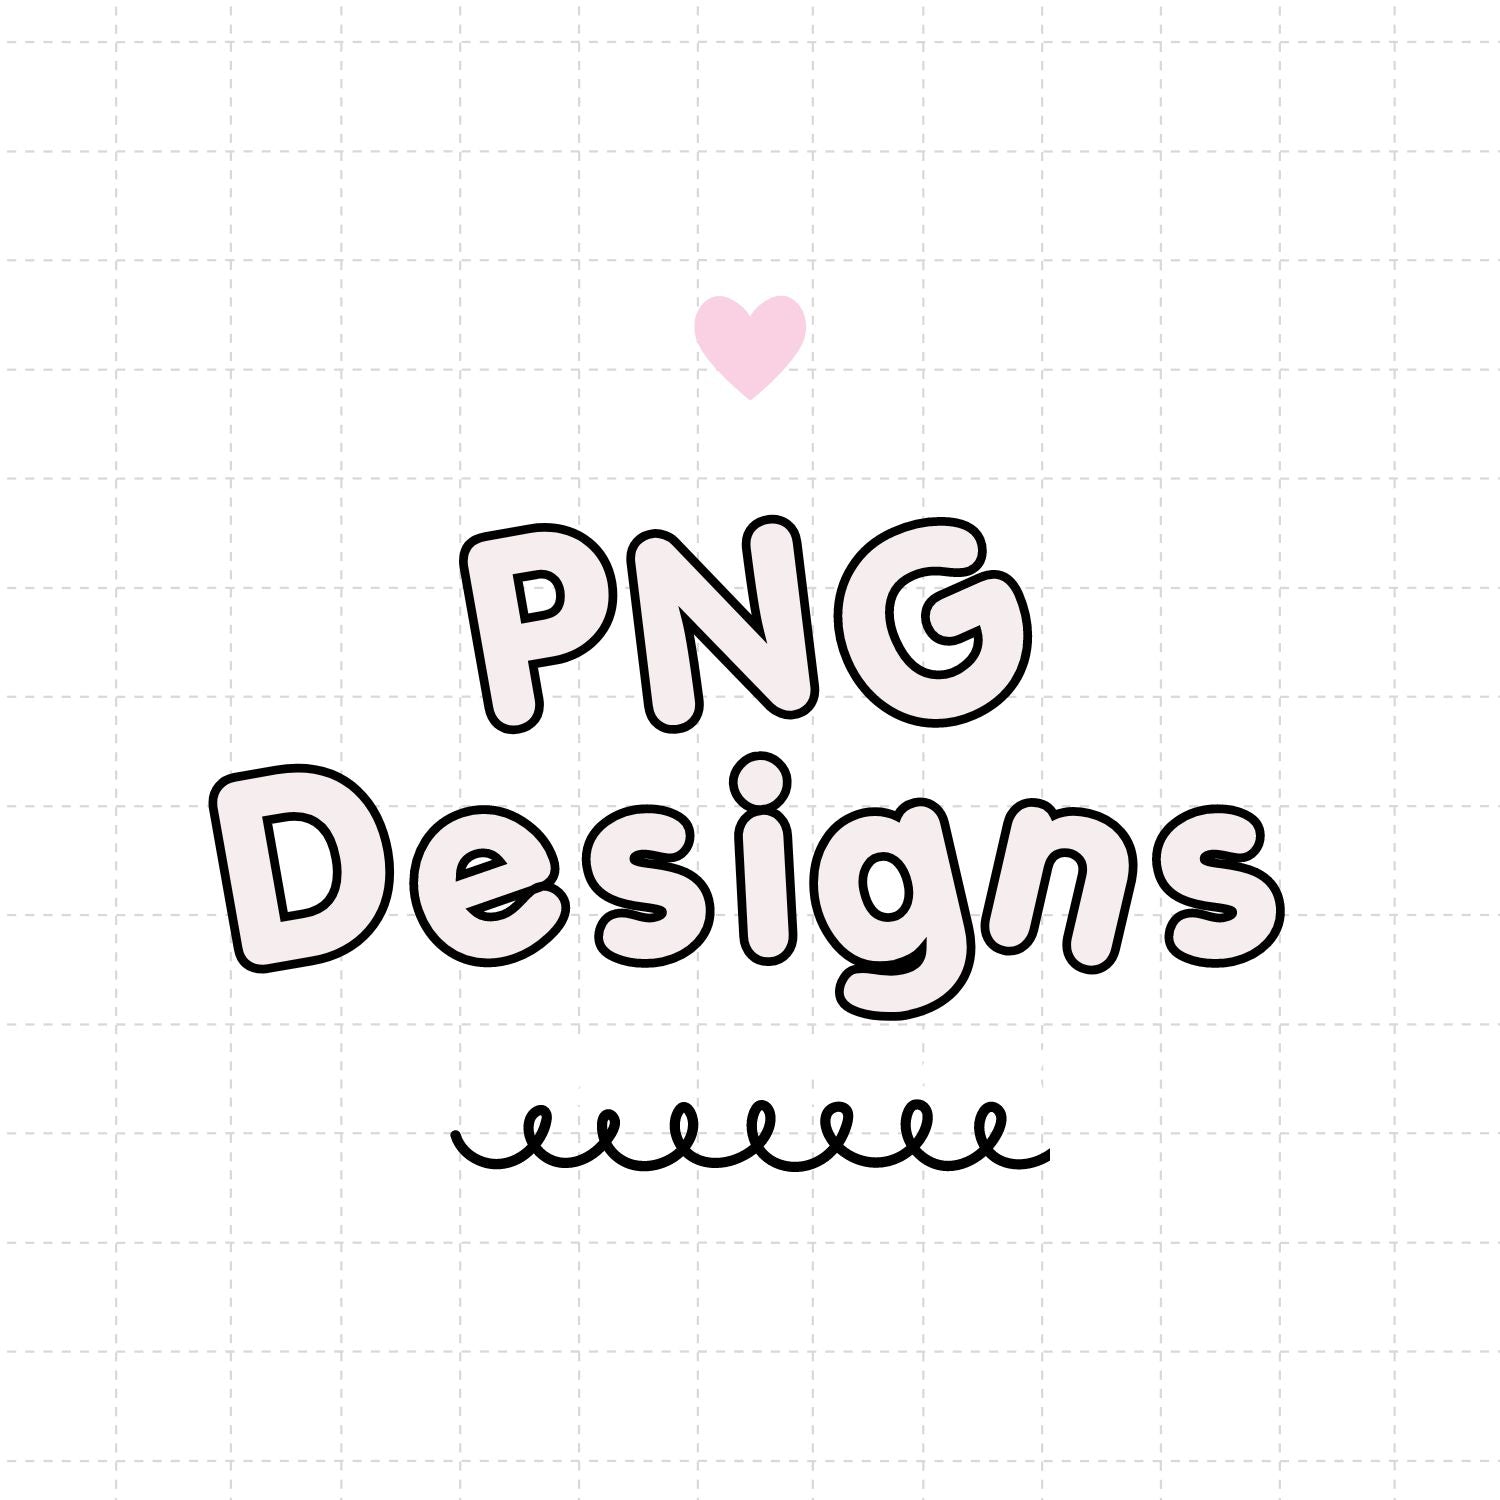 PNG Designs